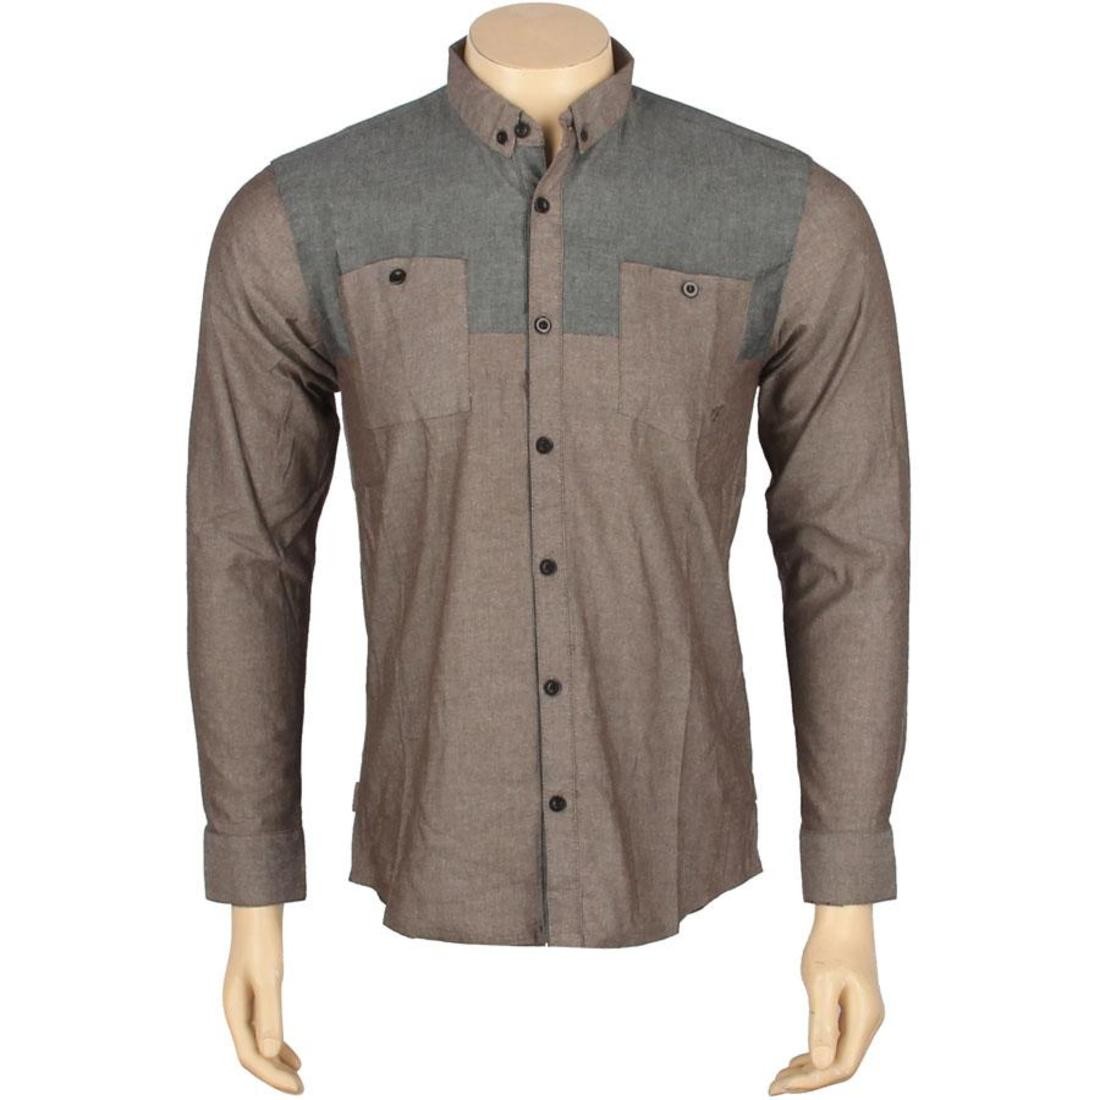 ARSNL Maurader Woven Long Sleeve Shirt (burnt grey chambray)